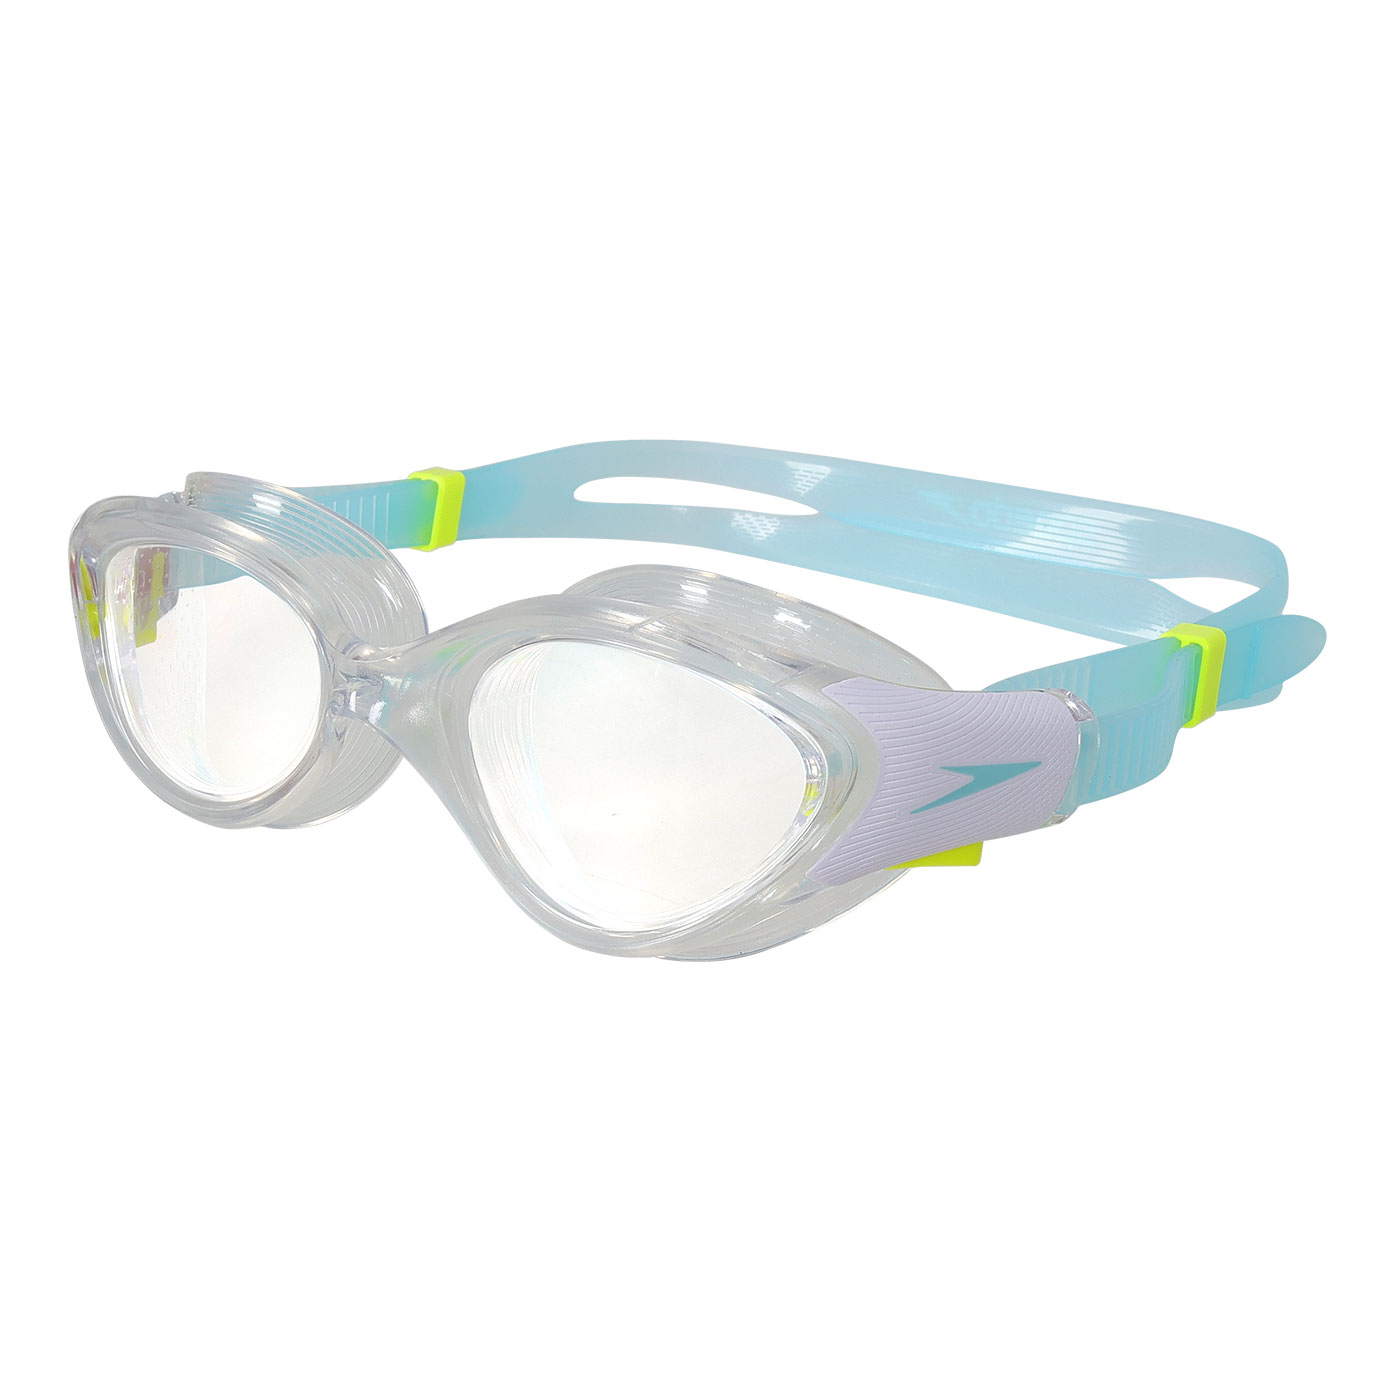 SPEEDO 女性運動泳鏡Biofuse2.0  SD800377616737 - 透明白綠黃